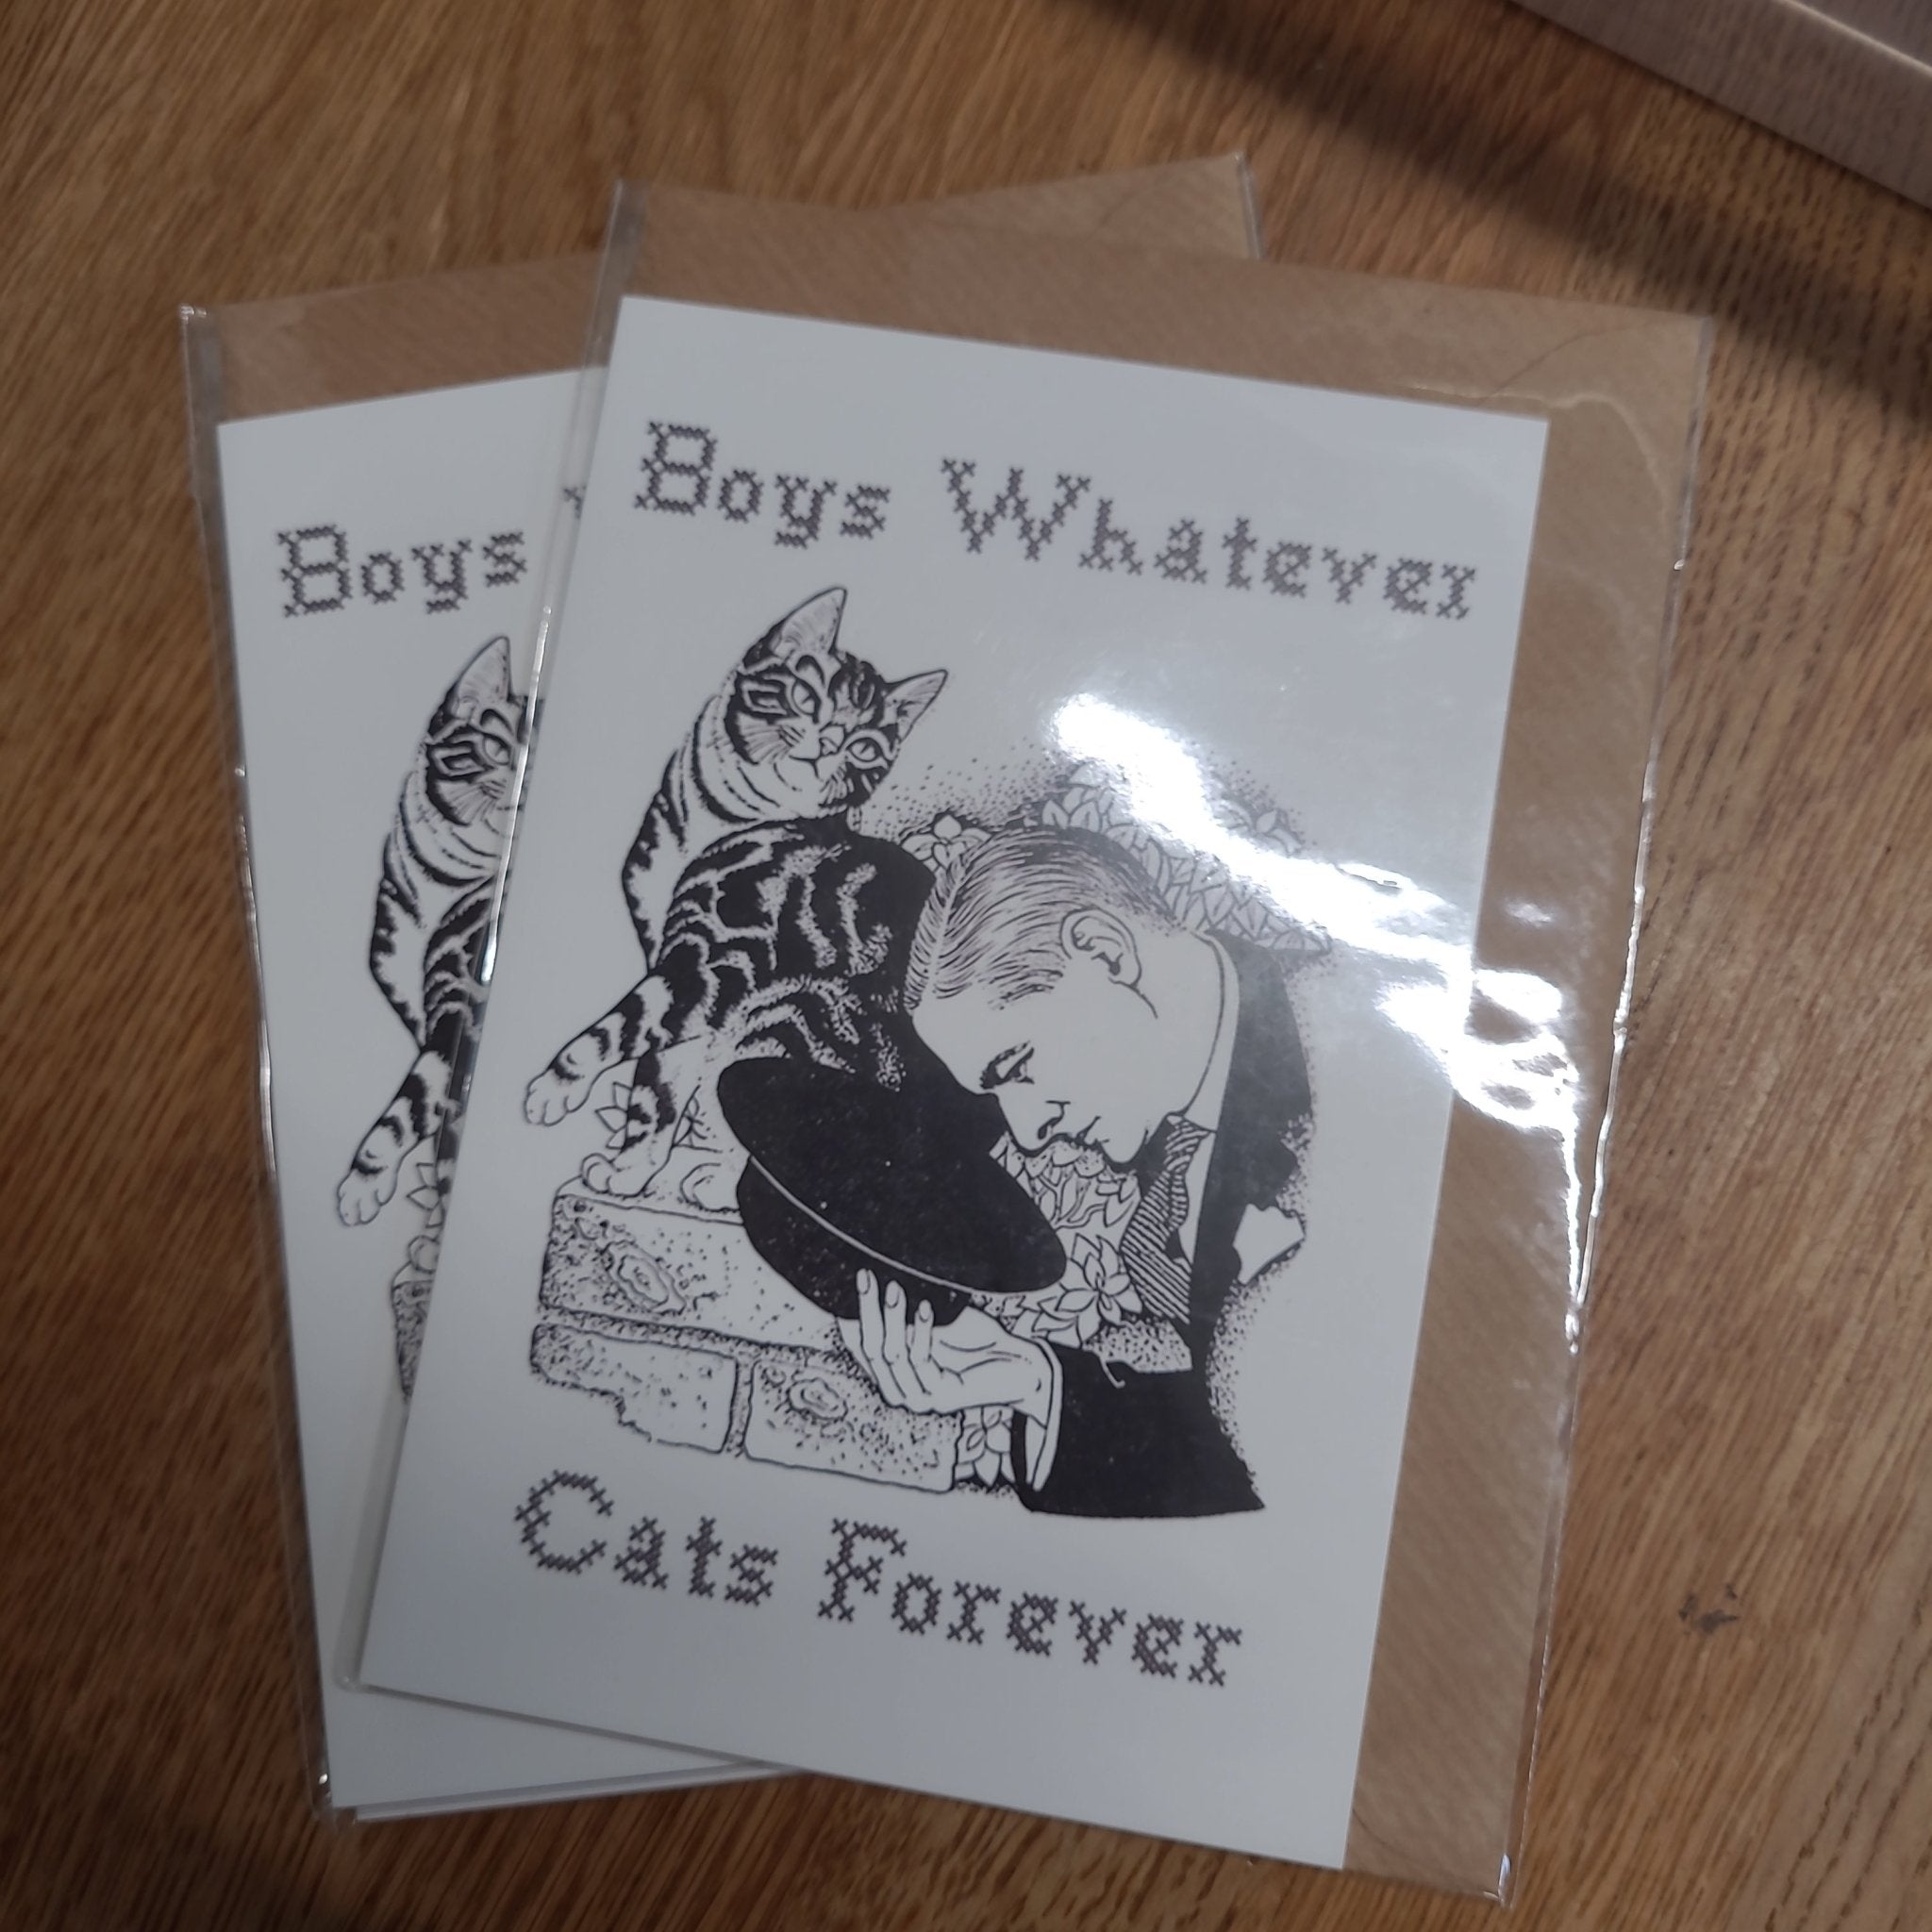 Boys Whatever, Cats Forever - darkling.be